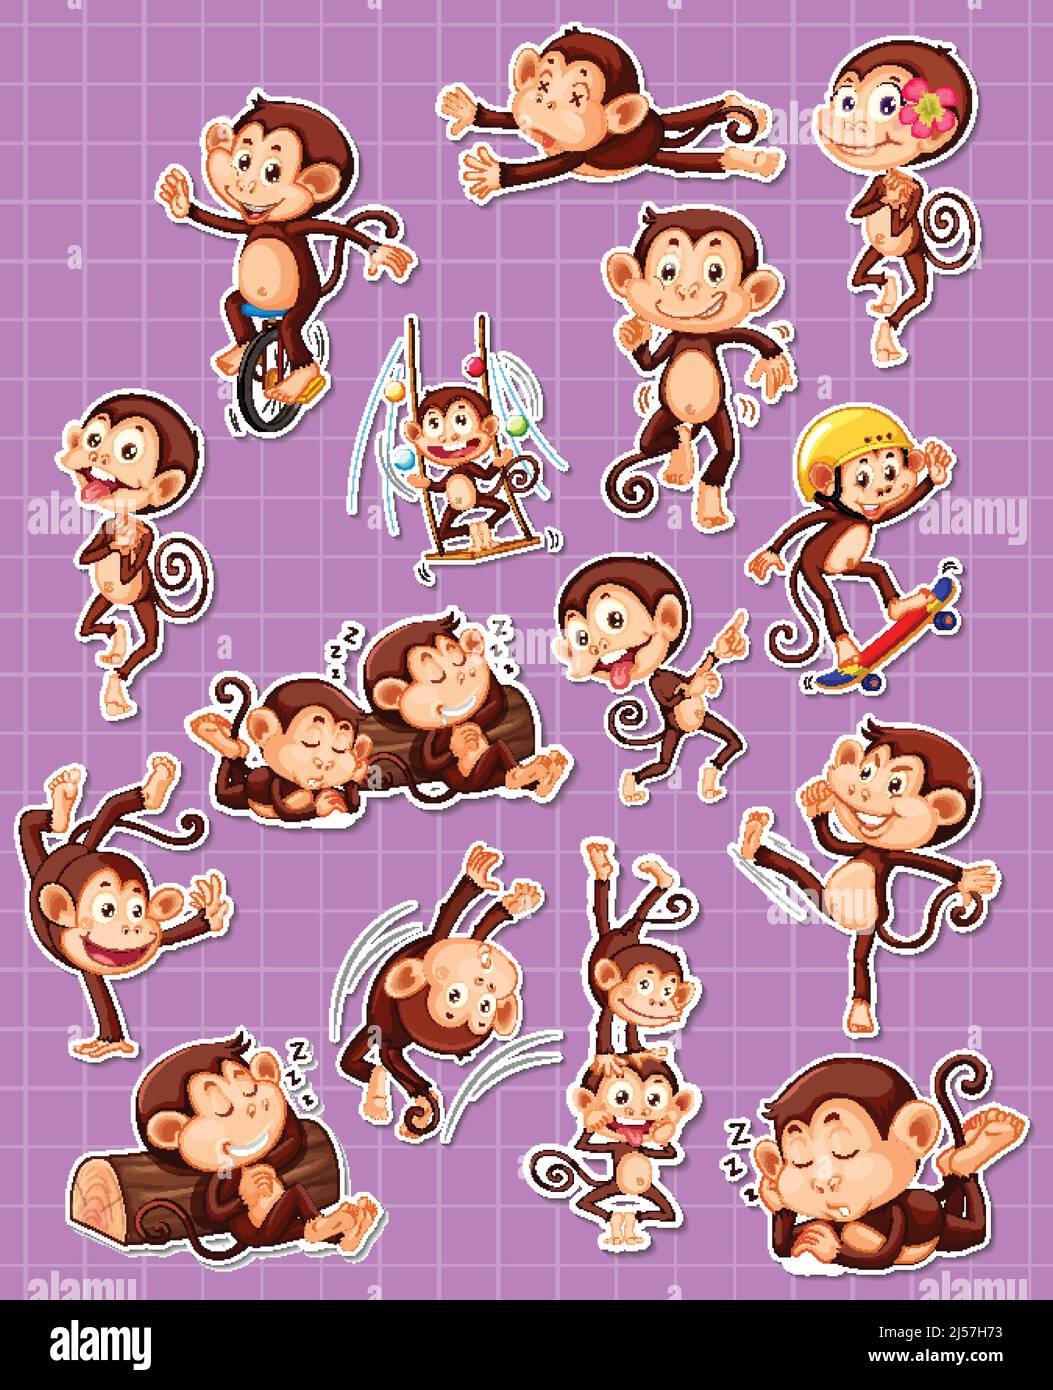 Sticker set of funny monkey cartoon characters illustration Stock ...